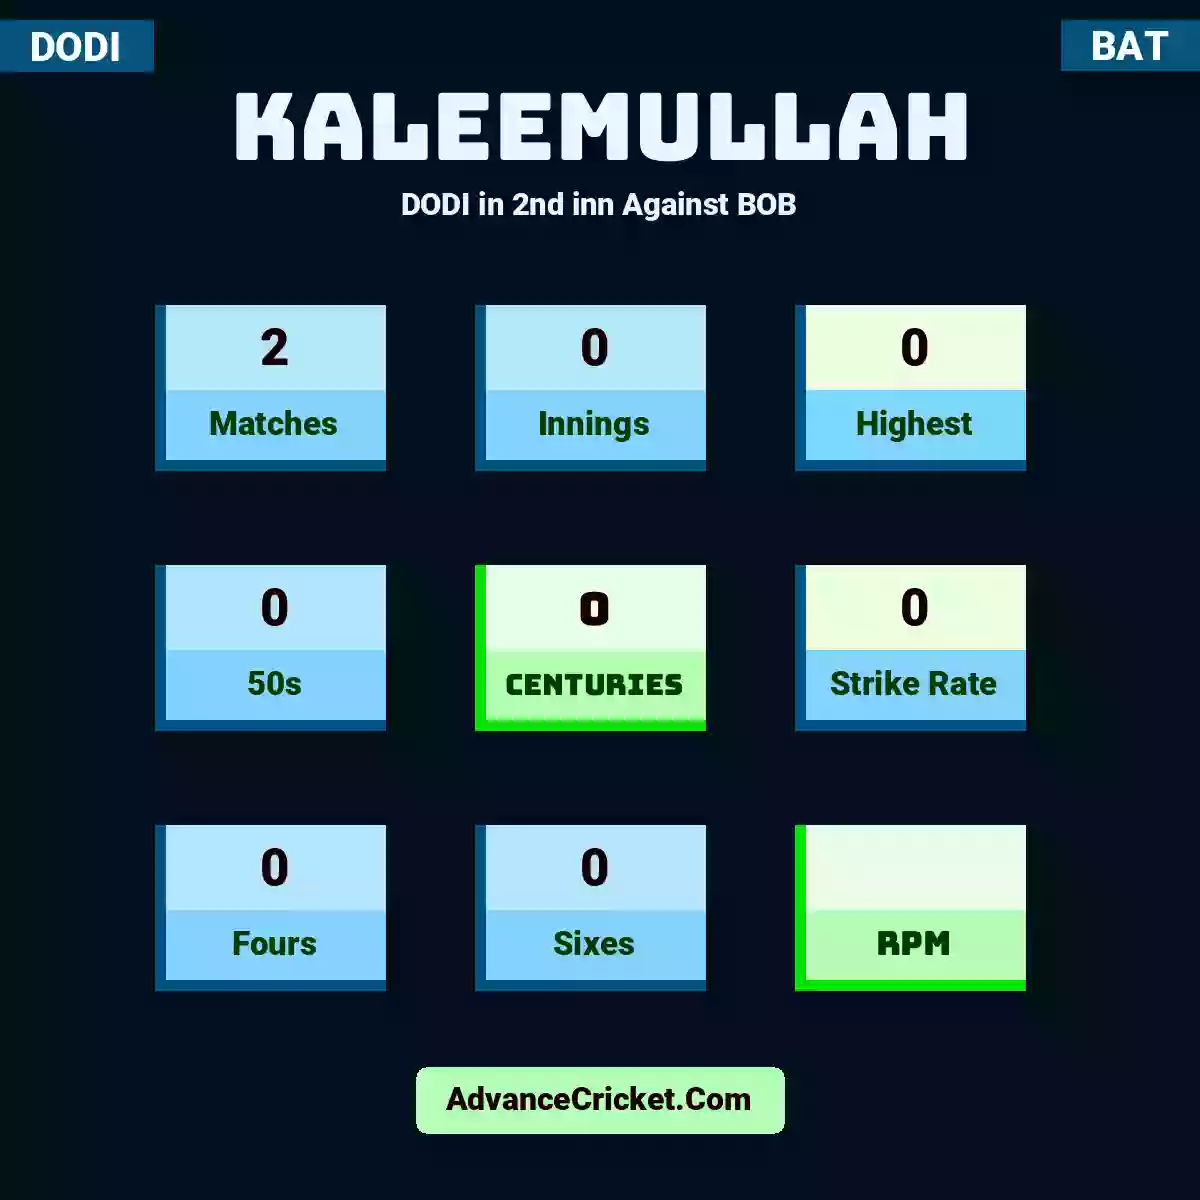 Kaleemullah DODI  in 2nd inn Against BOB, Kaleemullah played 2 matches, scored 0 runs as highest, 0 half-centuries, and 0 centuries, with a strike rate of 0. K.Kaleemullah hit 0 fours and 0 sixes.